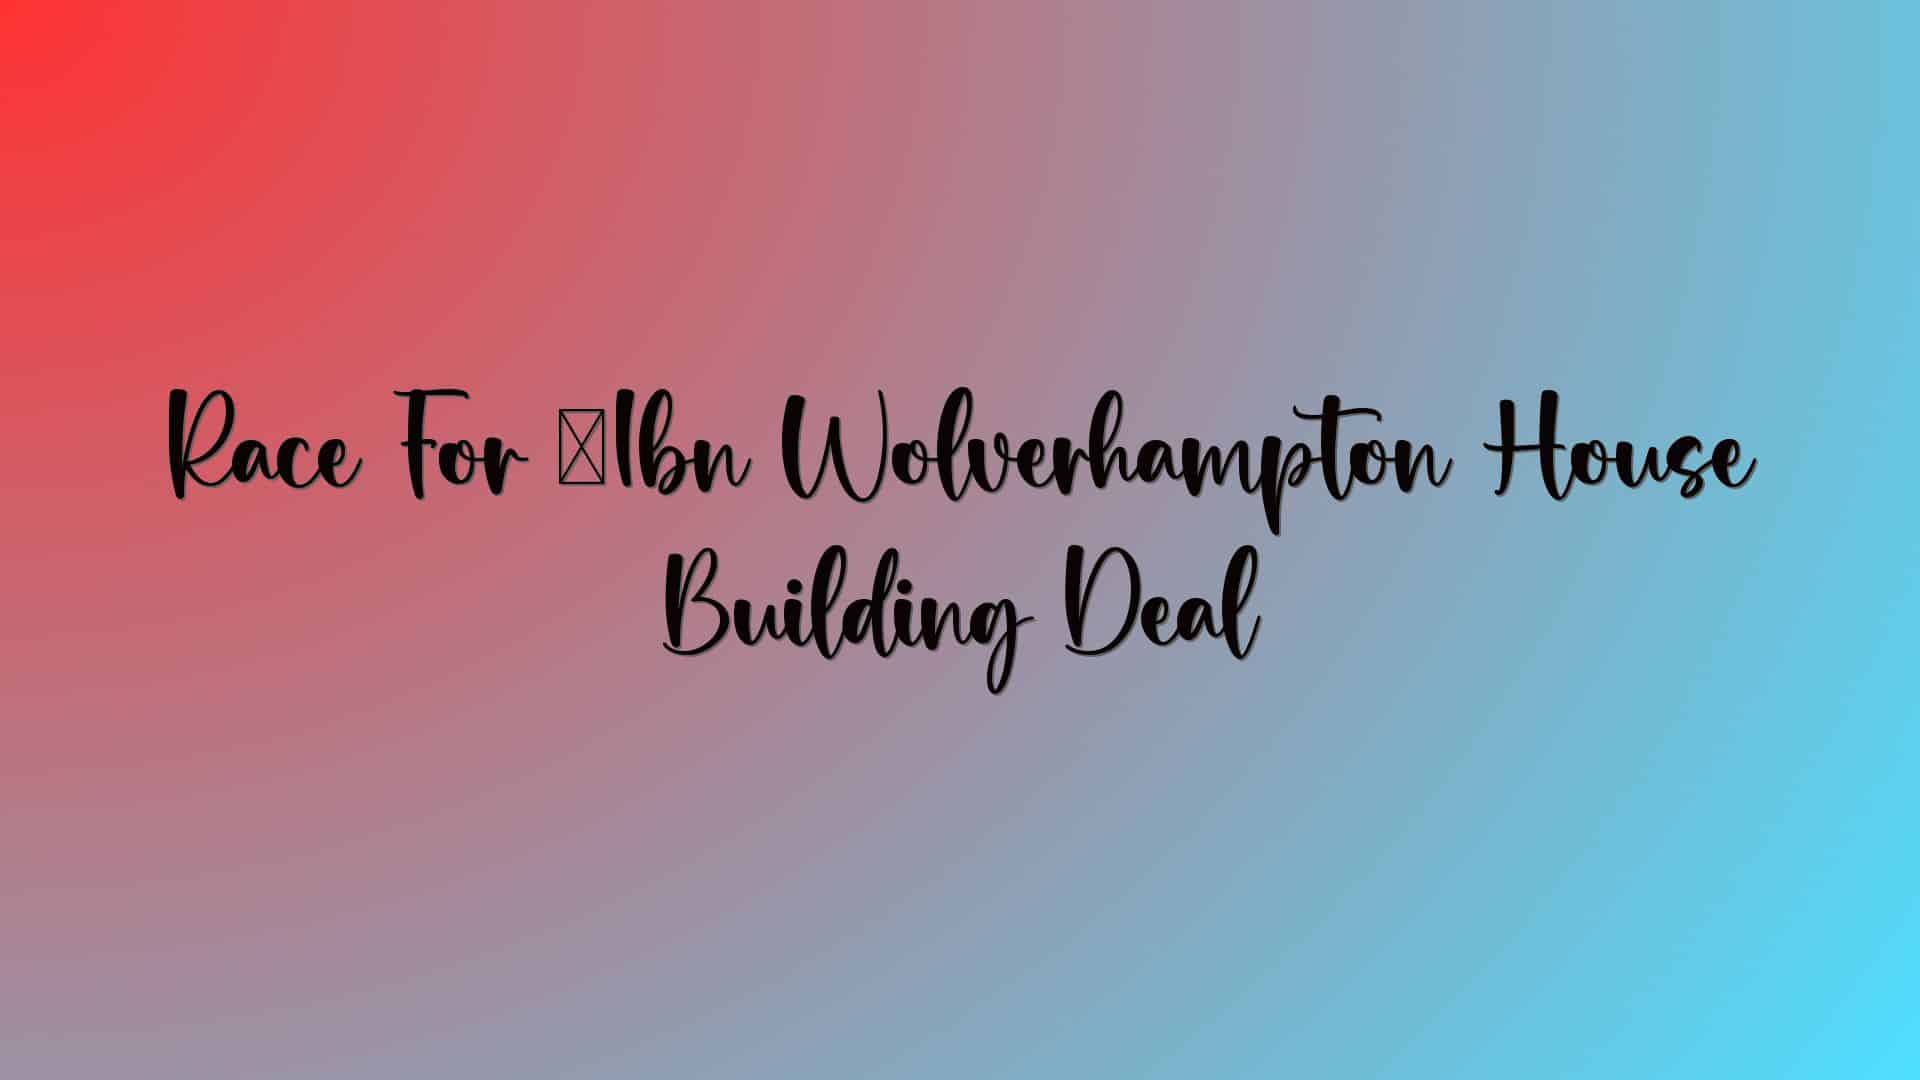 Race For £1bn Wolverhampton House Building Deal